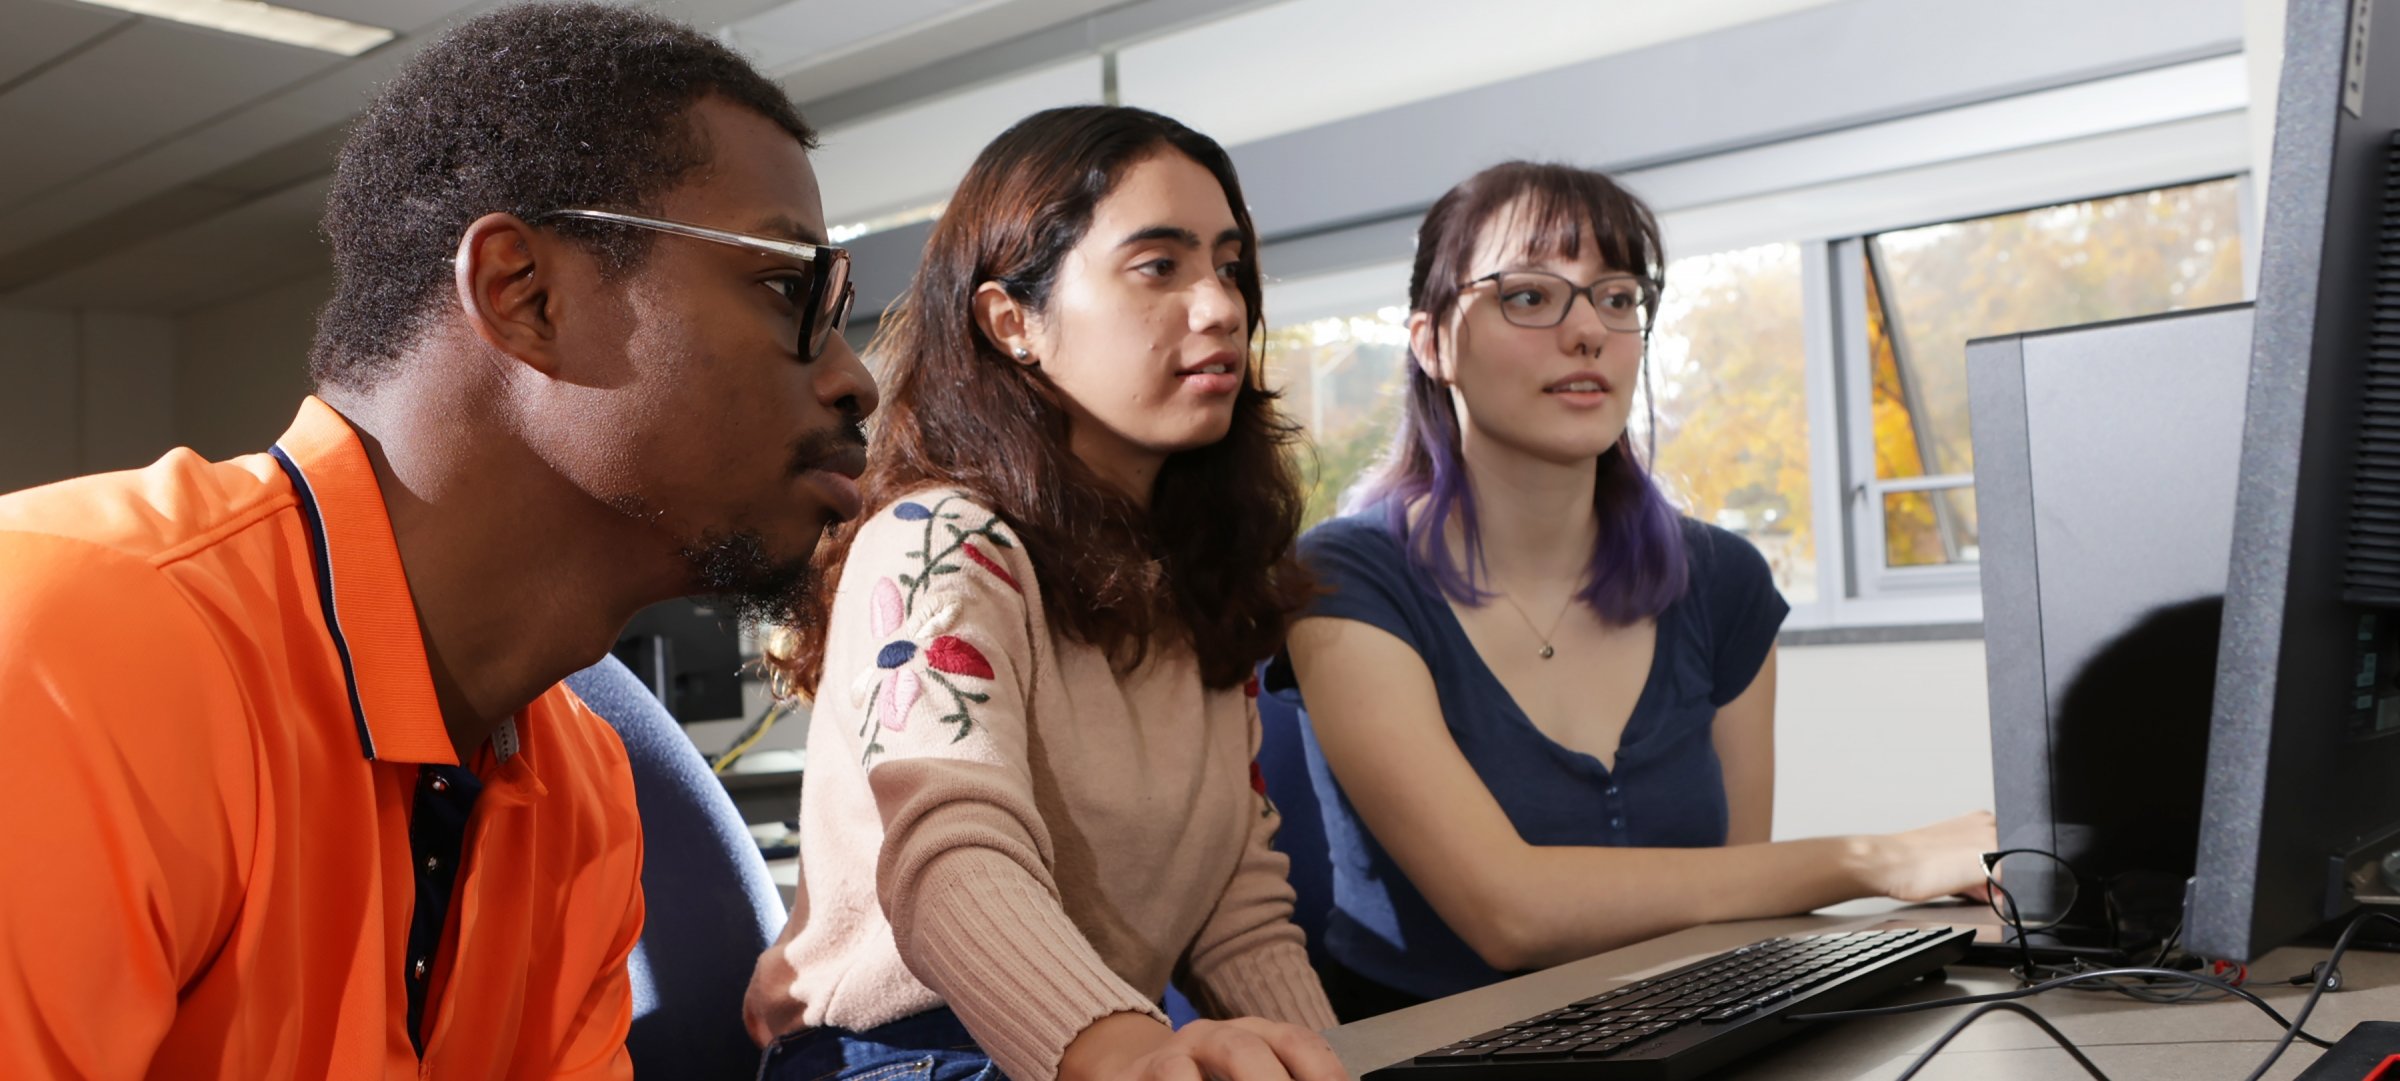 Michigan Tech Computing students share a computer